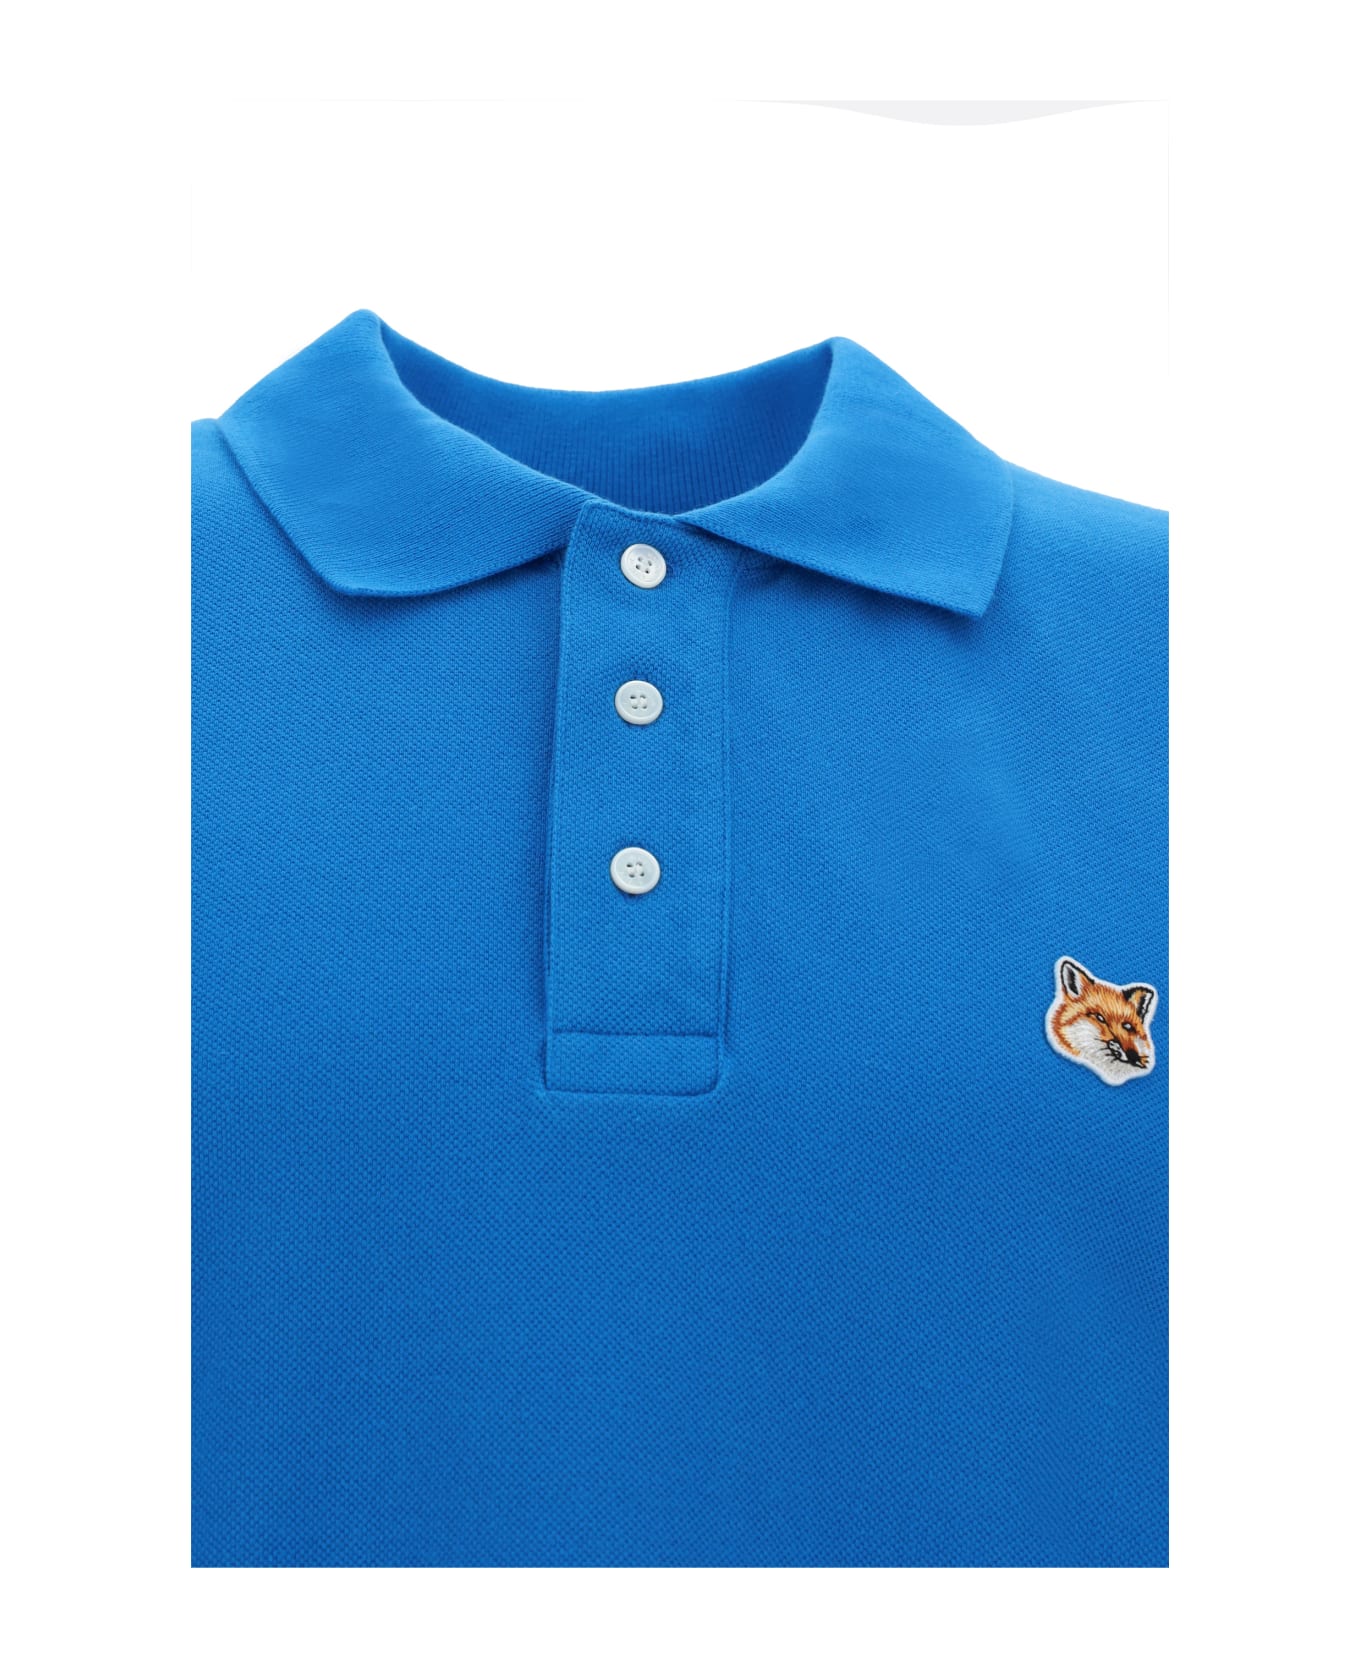 Maison Kitsuné Polo Shirt - Enamelblue ポロシャツ